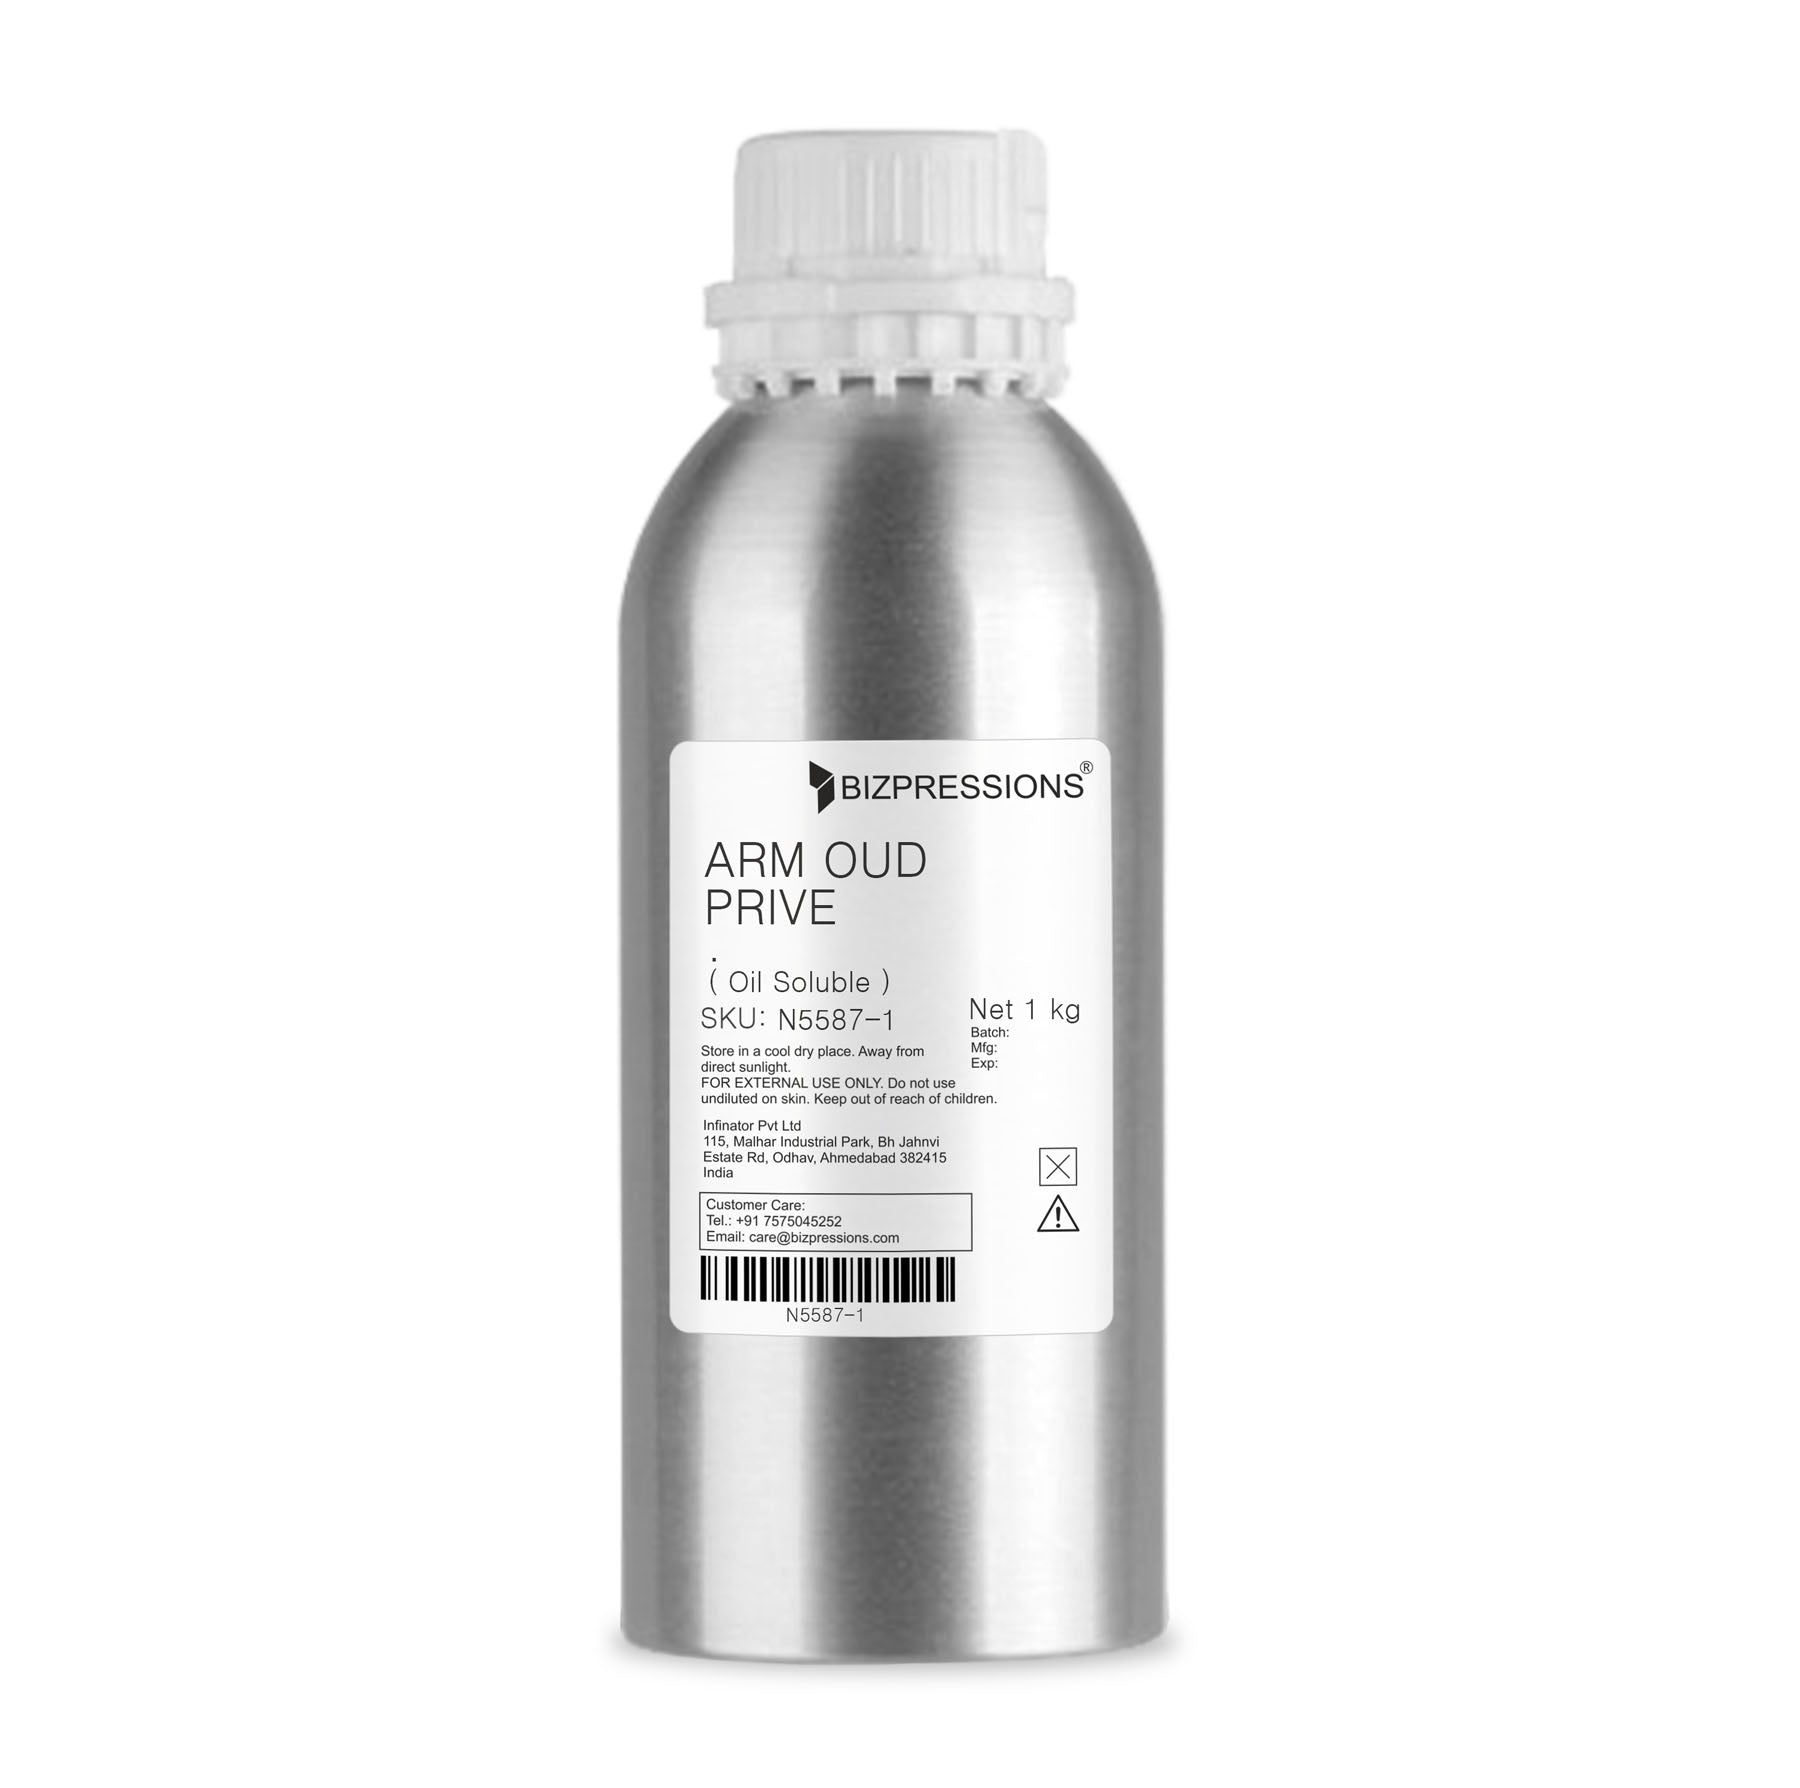 ARM OUD PRIVE - Fragrance ( Oil Soluble ) - 1 kg